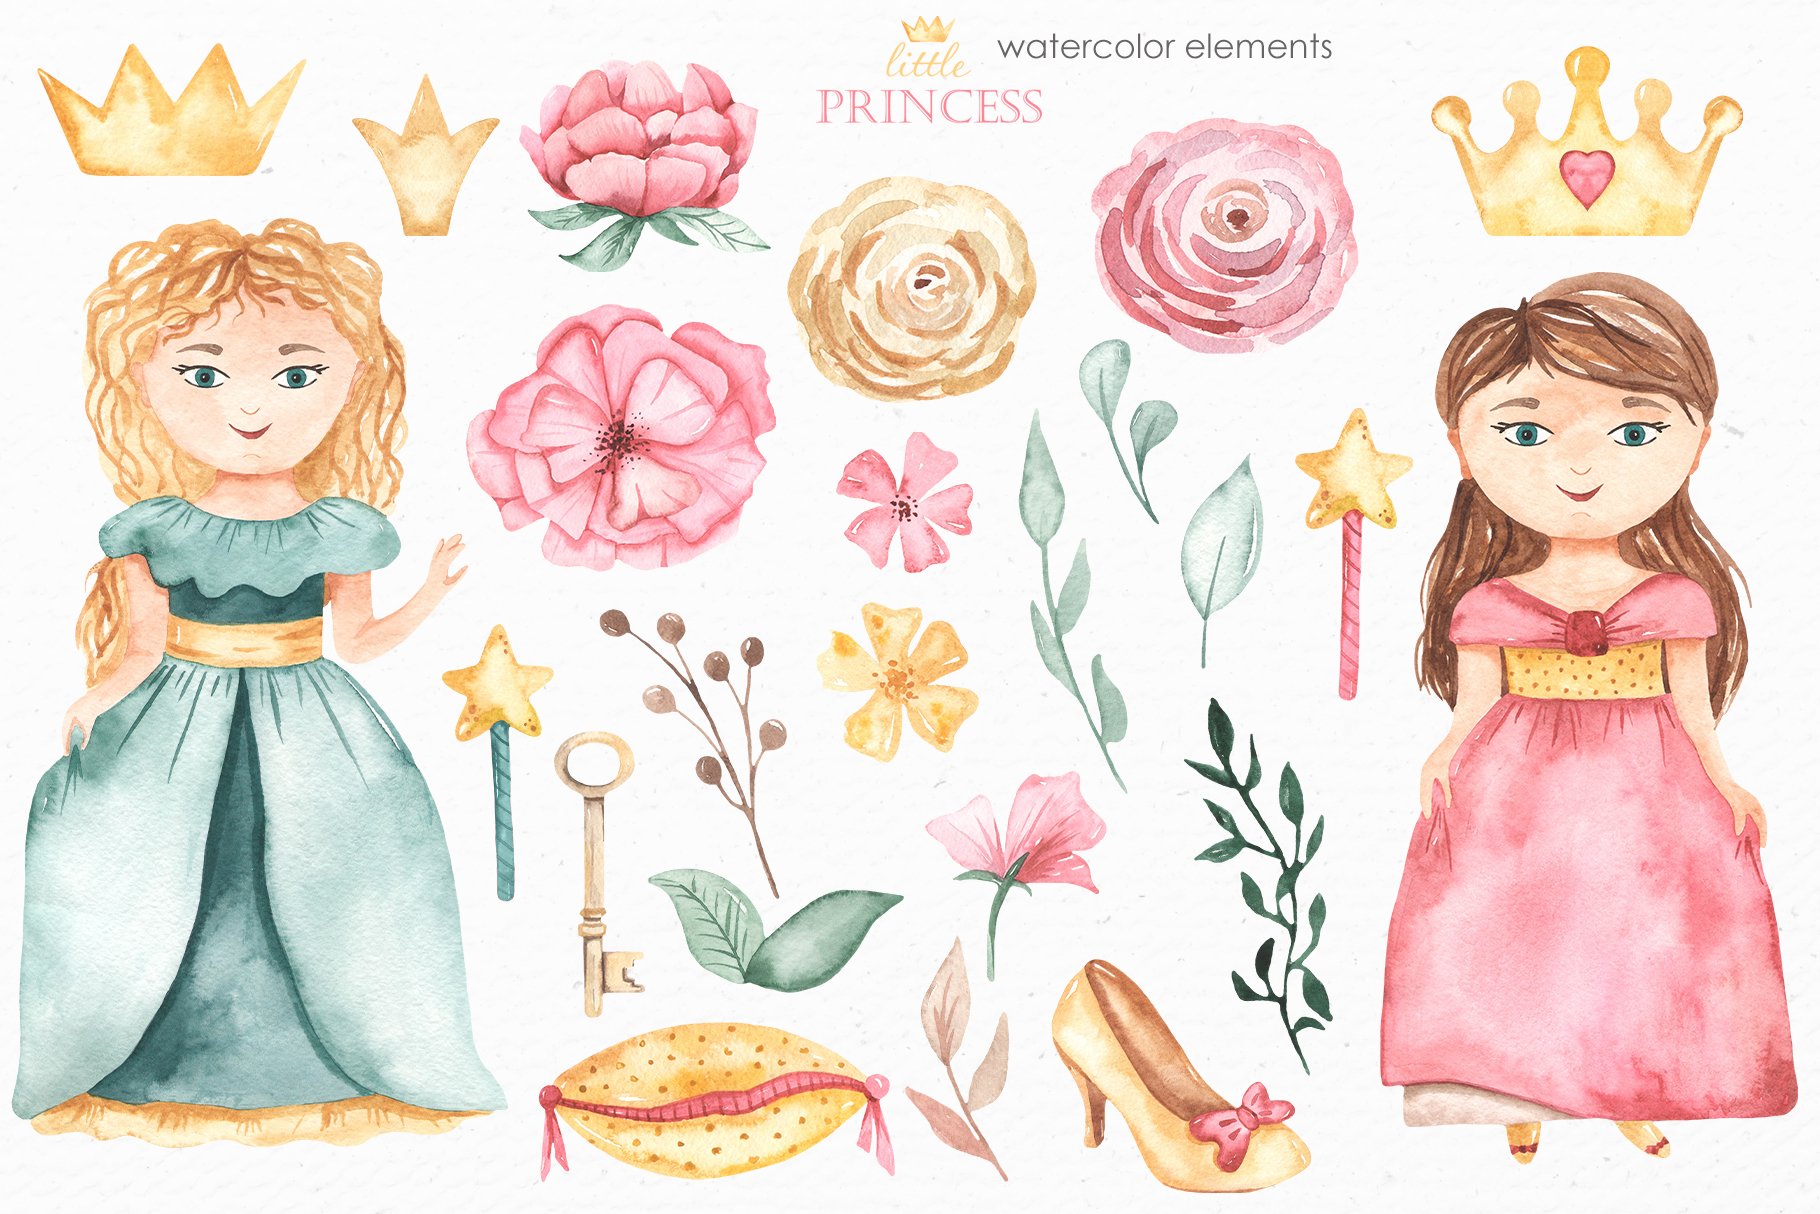 Little princess watercolor preview image.